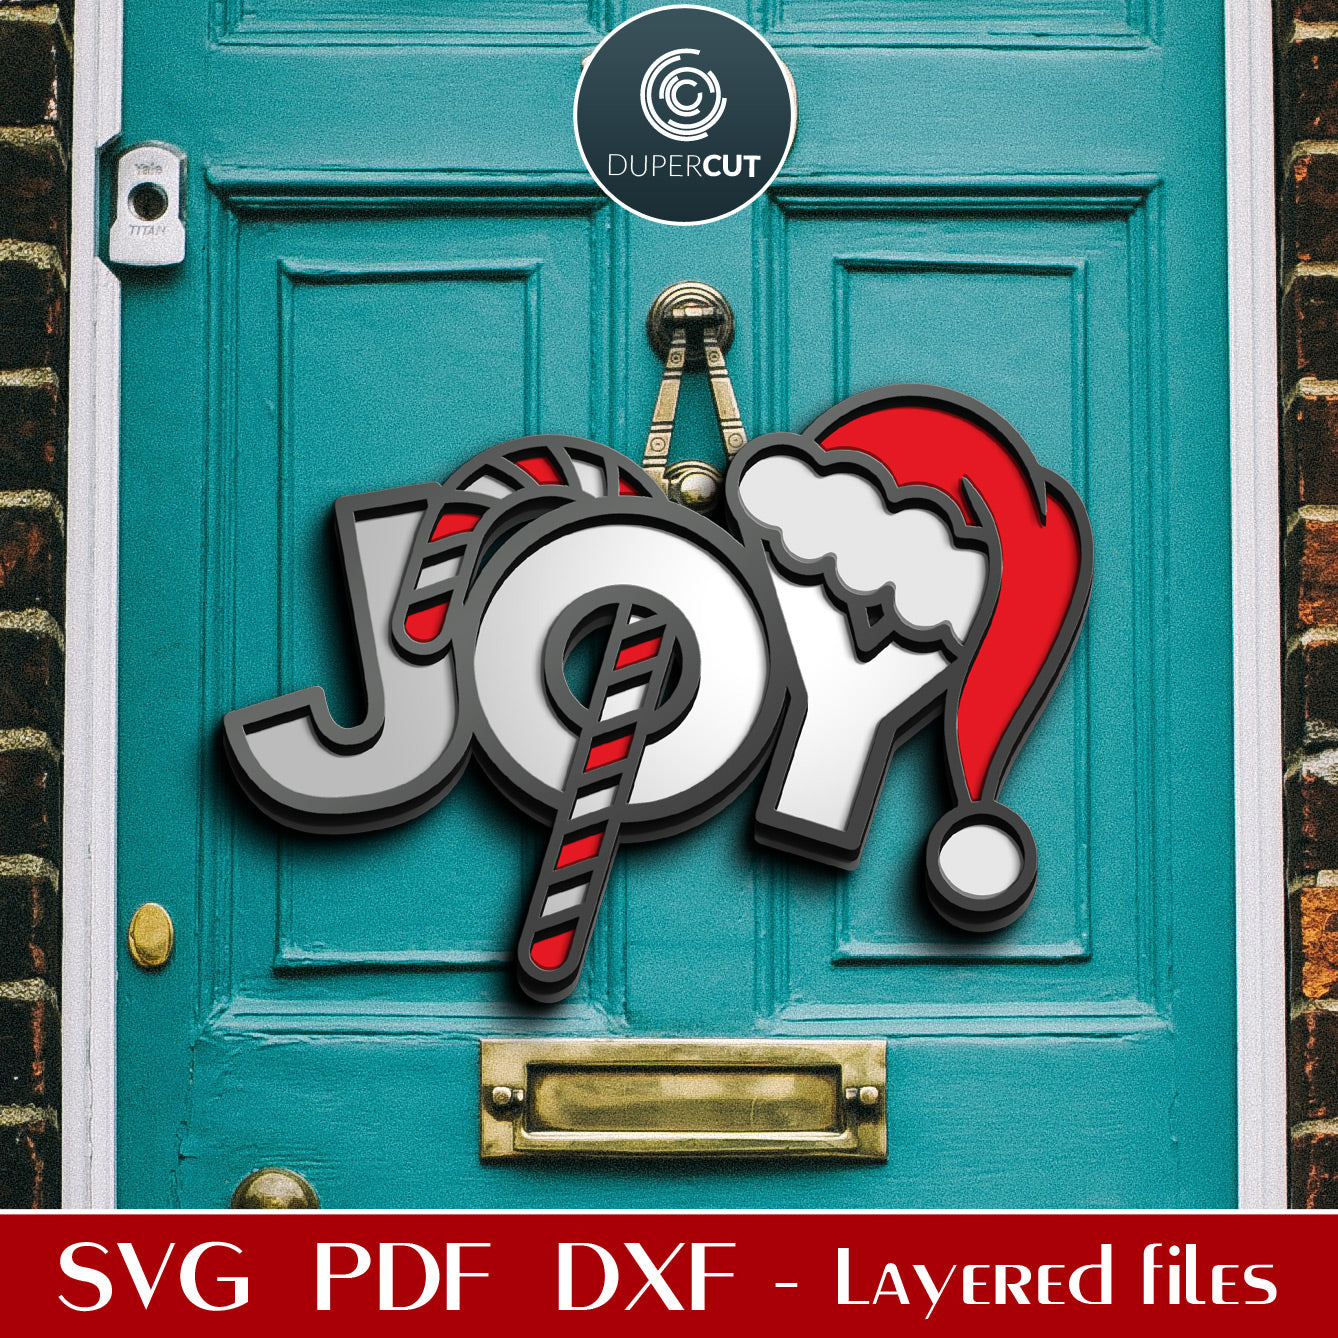 Joy Christmas sign door hanger pattern - SVG DXF layered cutting files for Glowforge, Cricut, scroll saw, CNC plasma machines by DuperCut.com